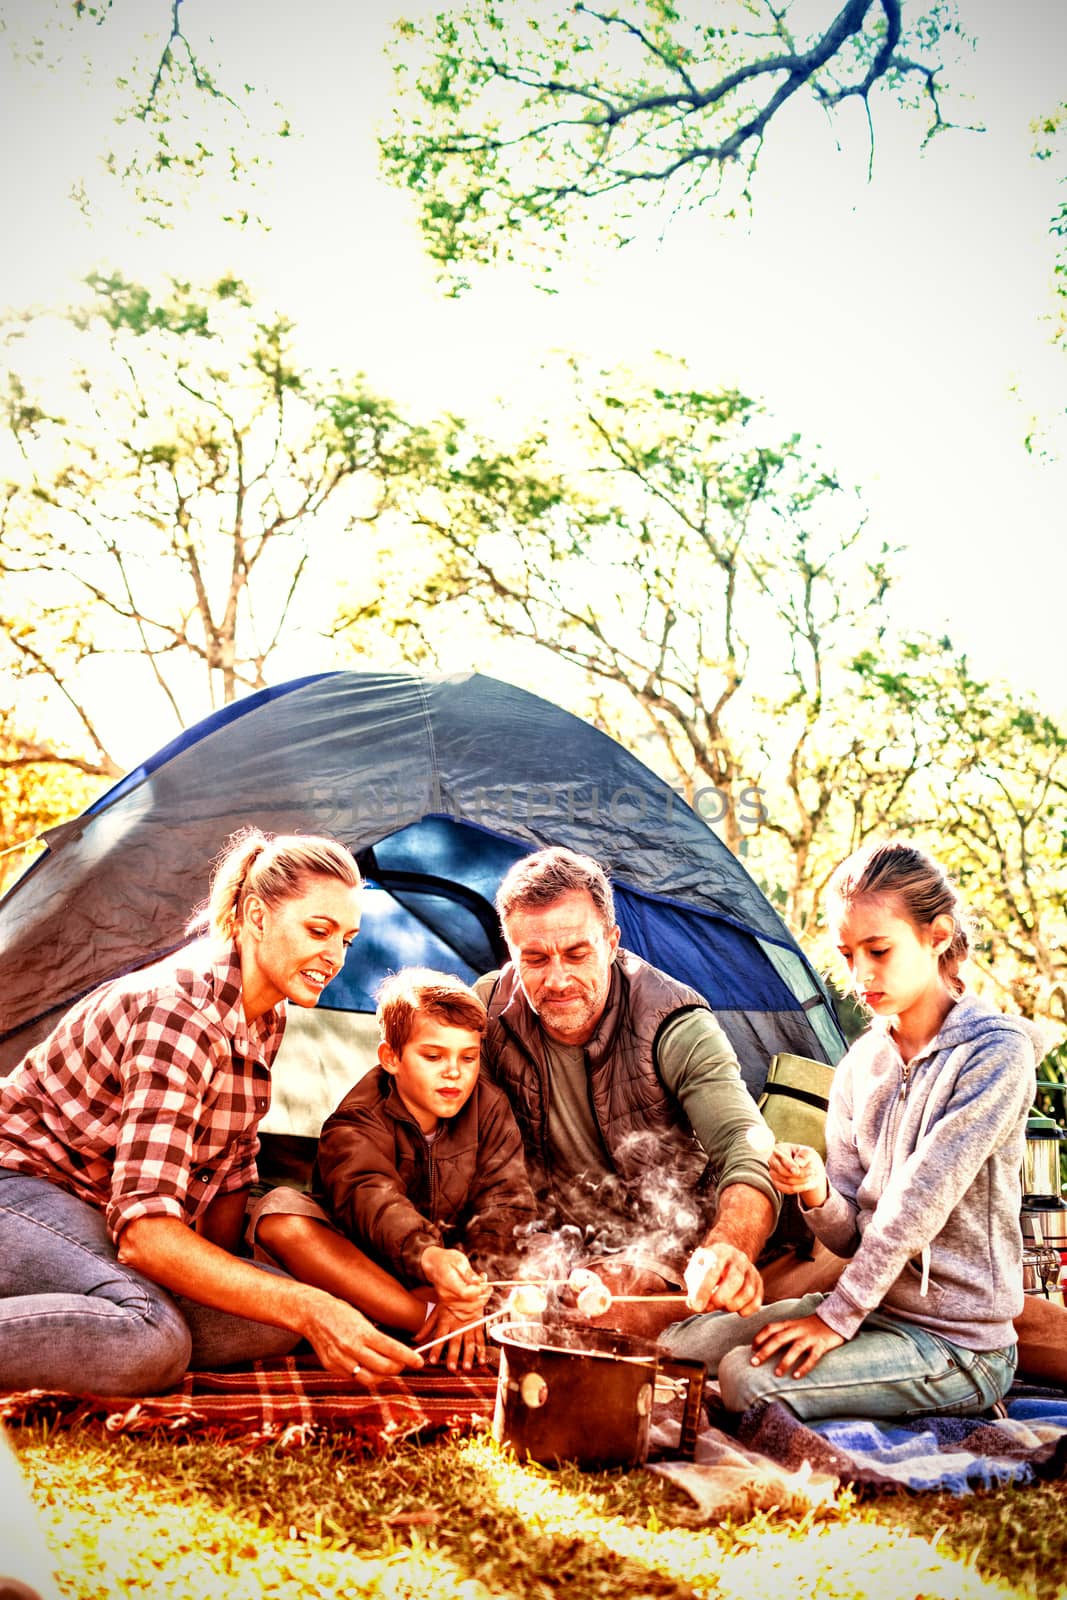 Family roasting marshmallows outside the tent by Wavebreakmedia